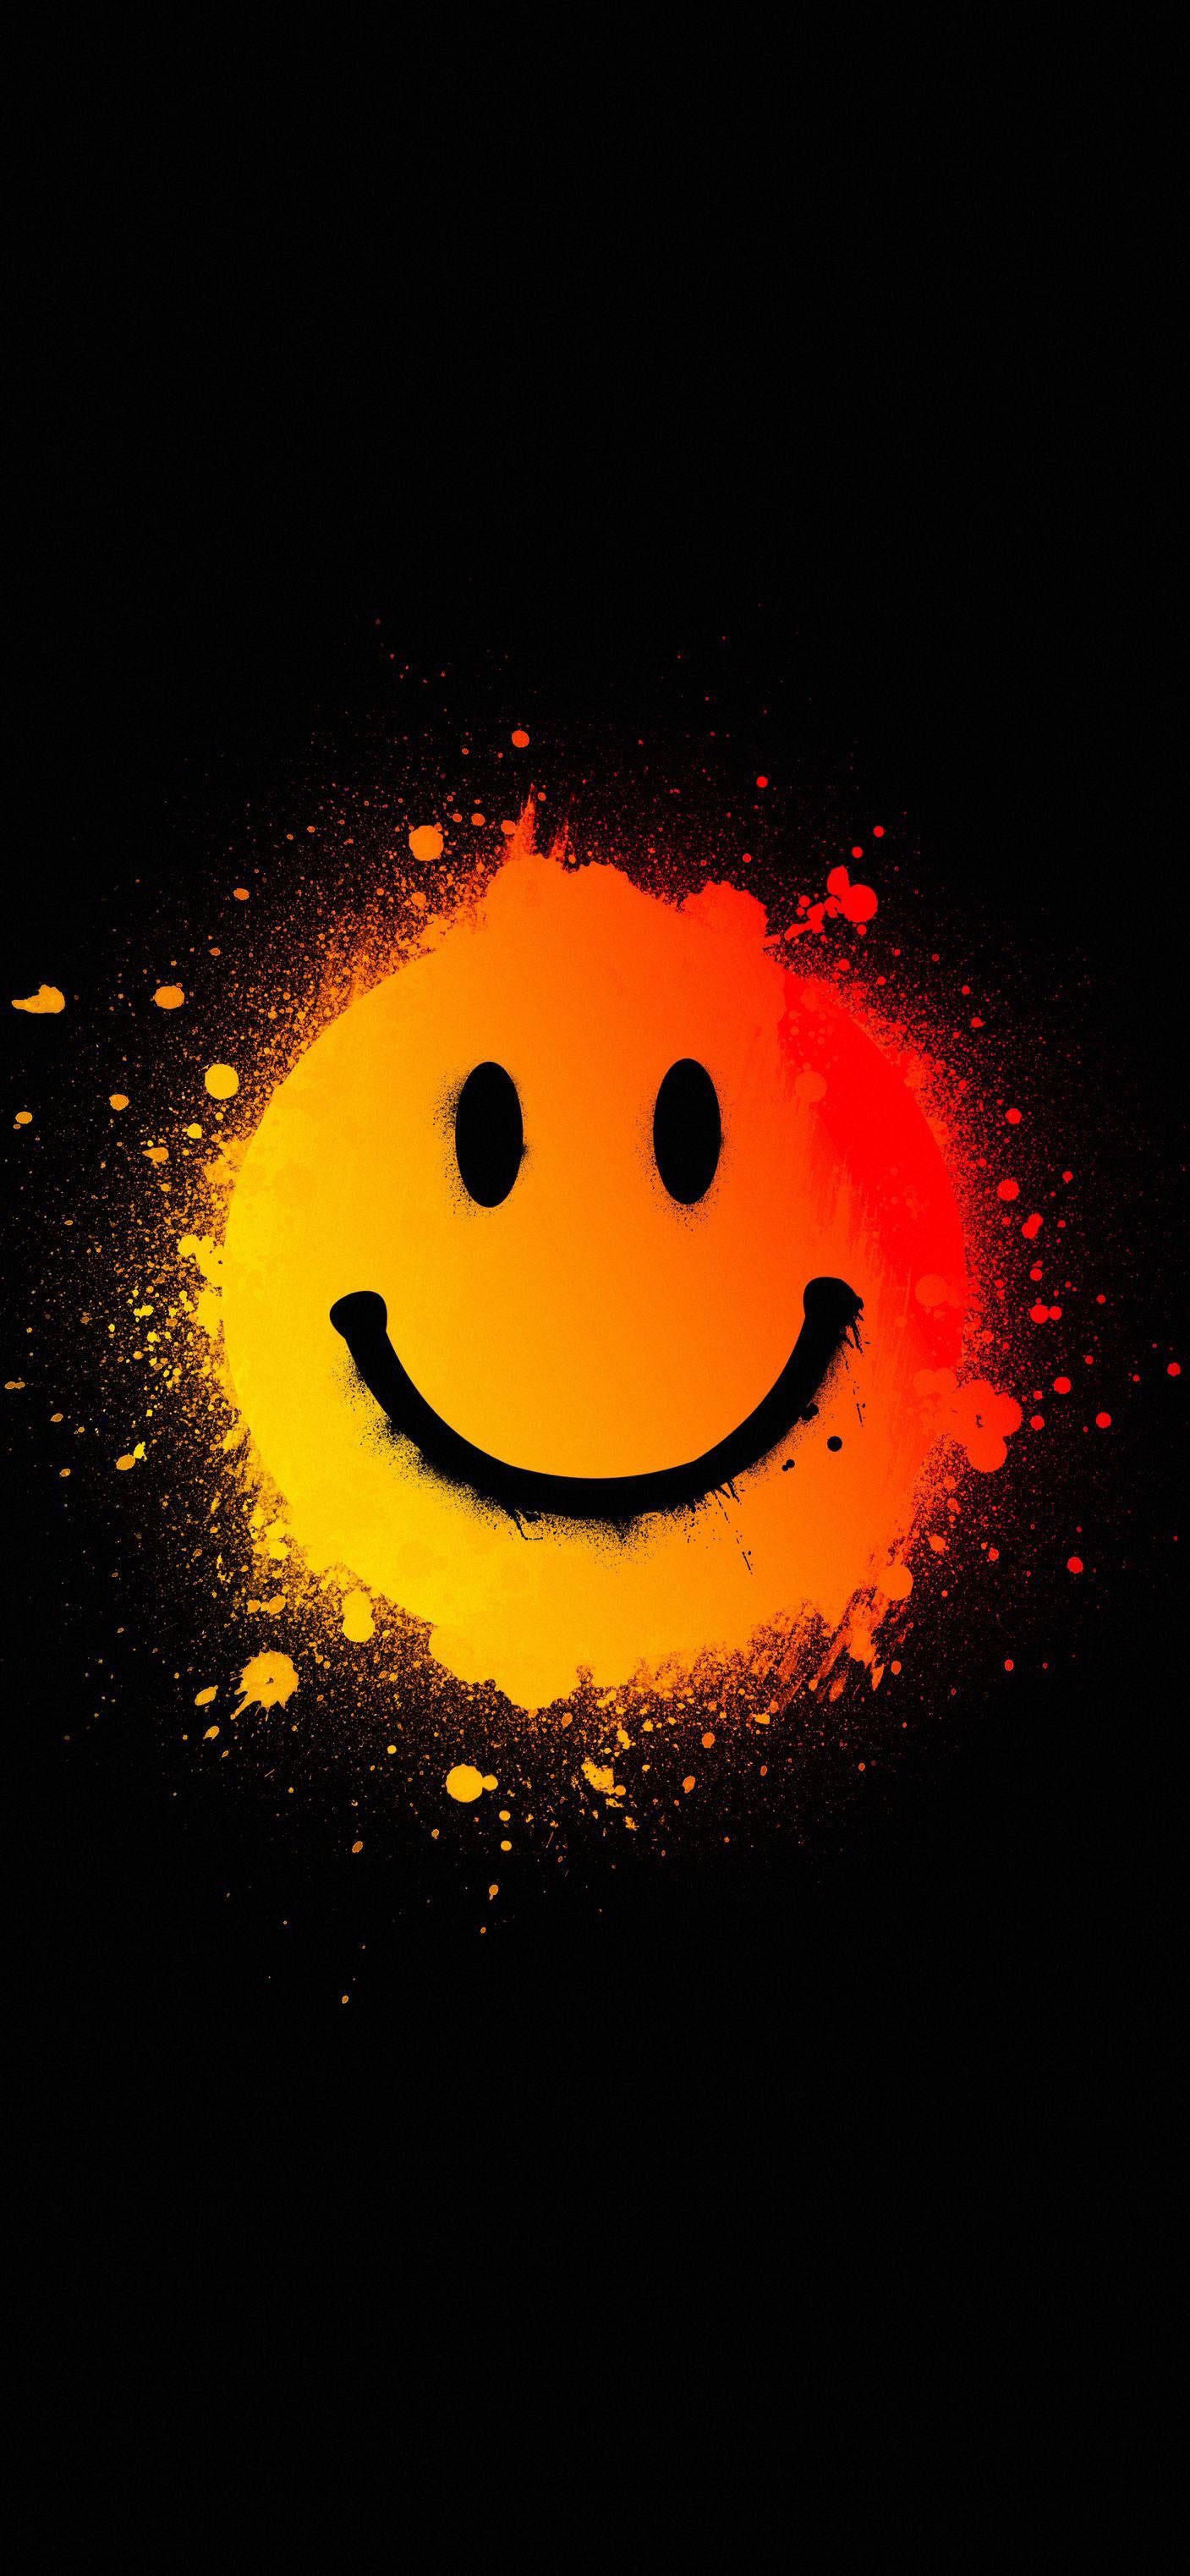 Wallpaper Smiley Emoji Nose Head Chin Background  Download Free Image